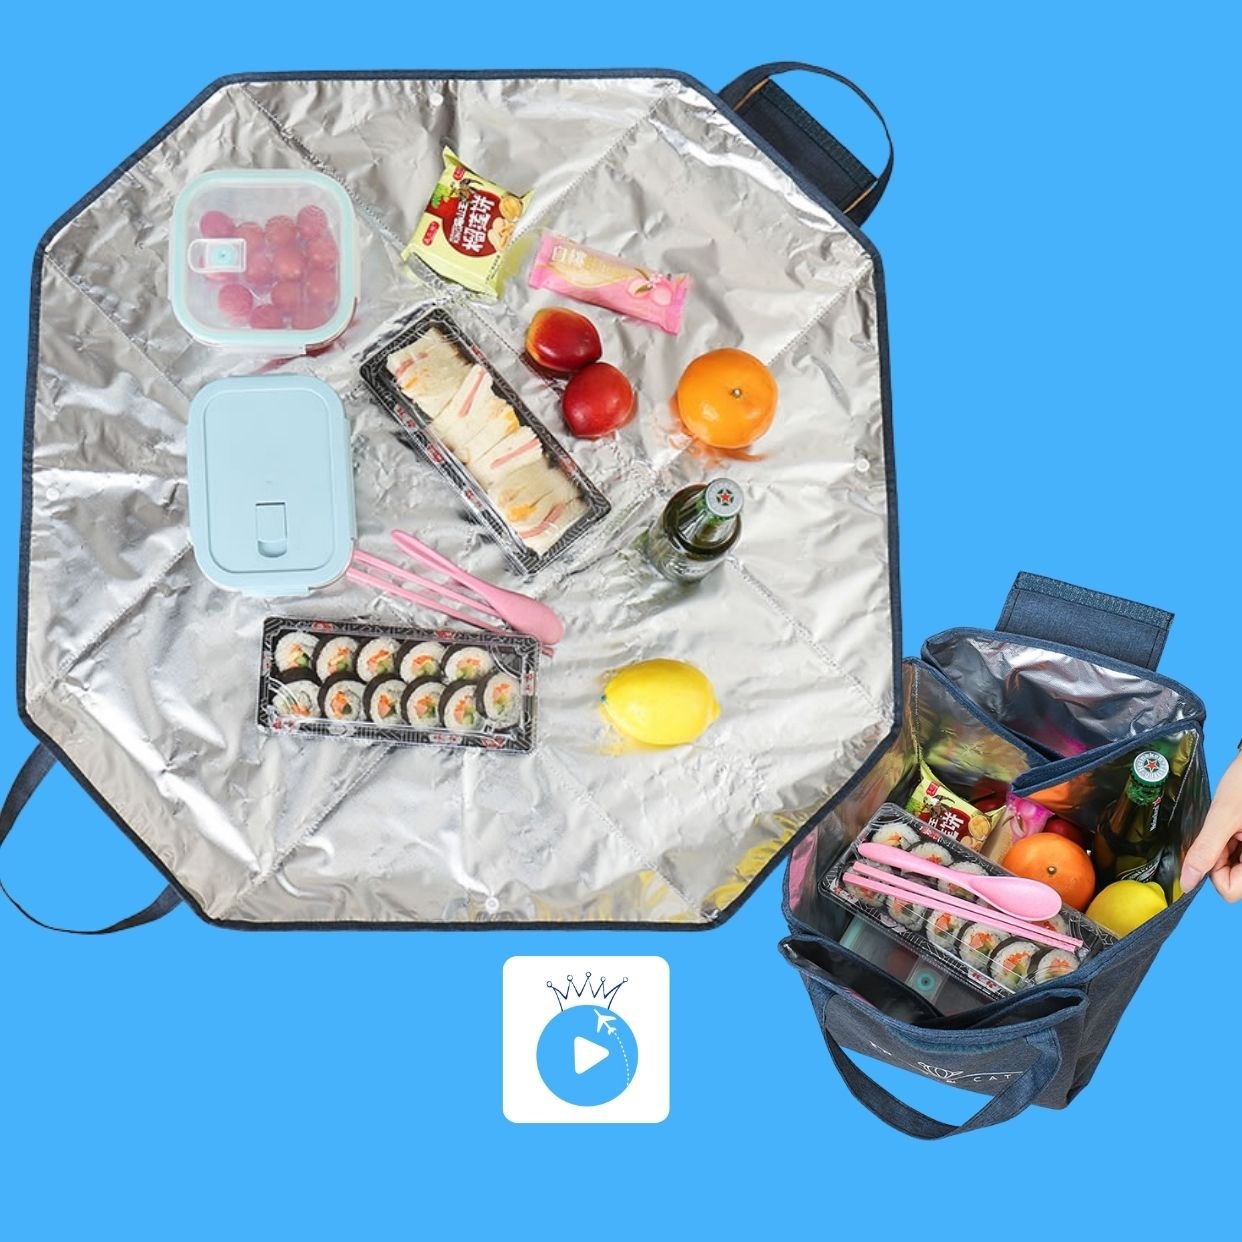 Travel must have items - picnic 旅行好物- 野餐包+野餐垫